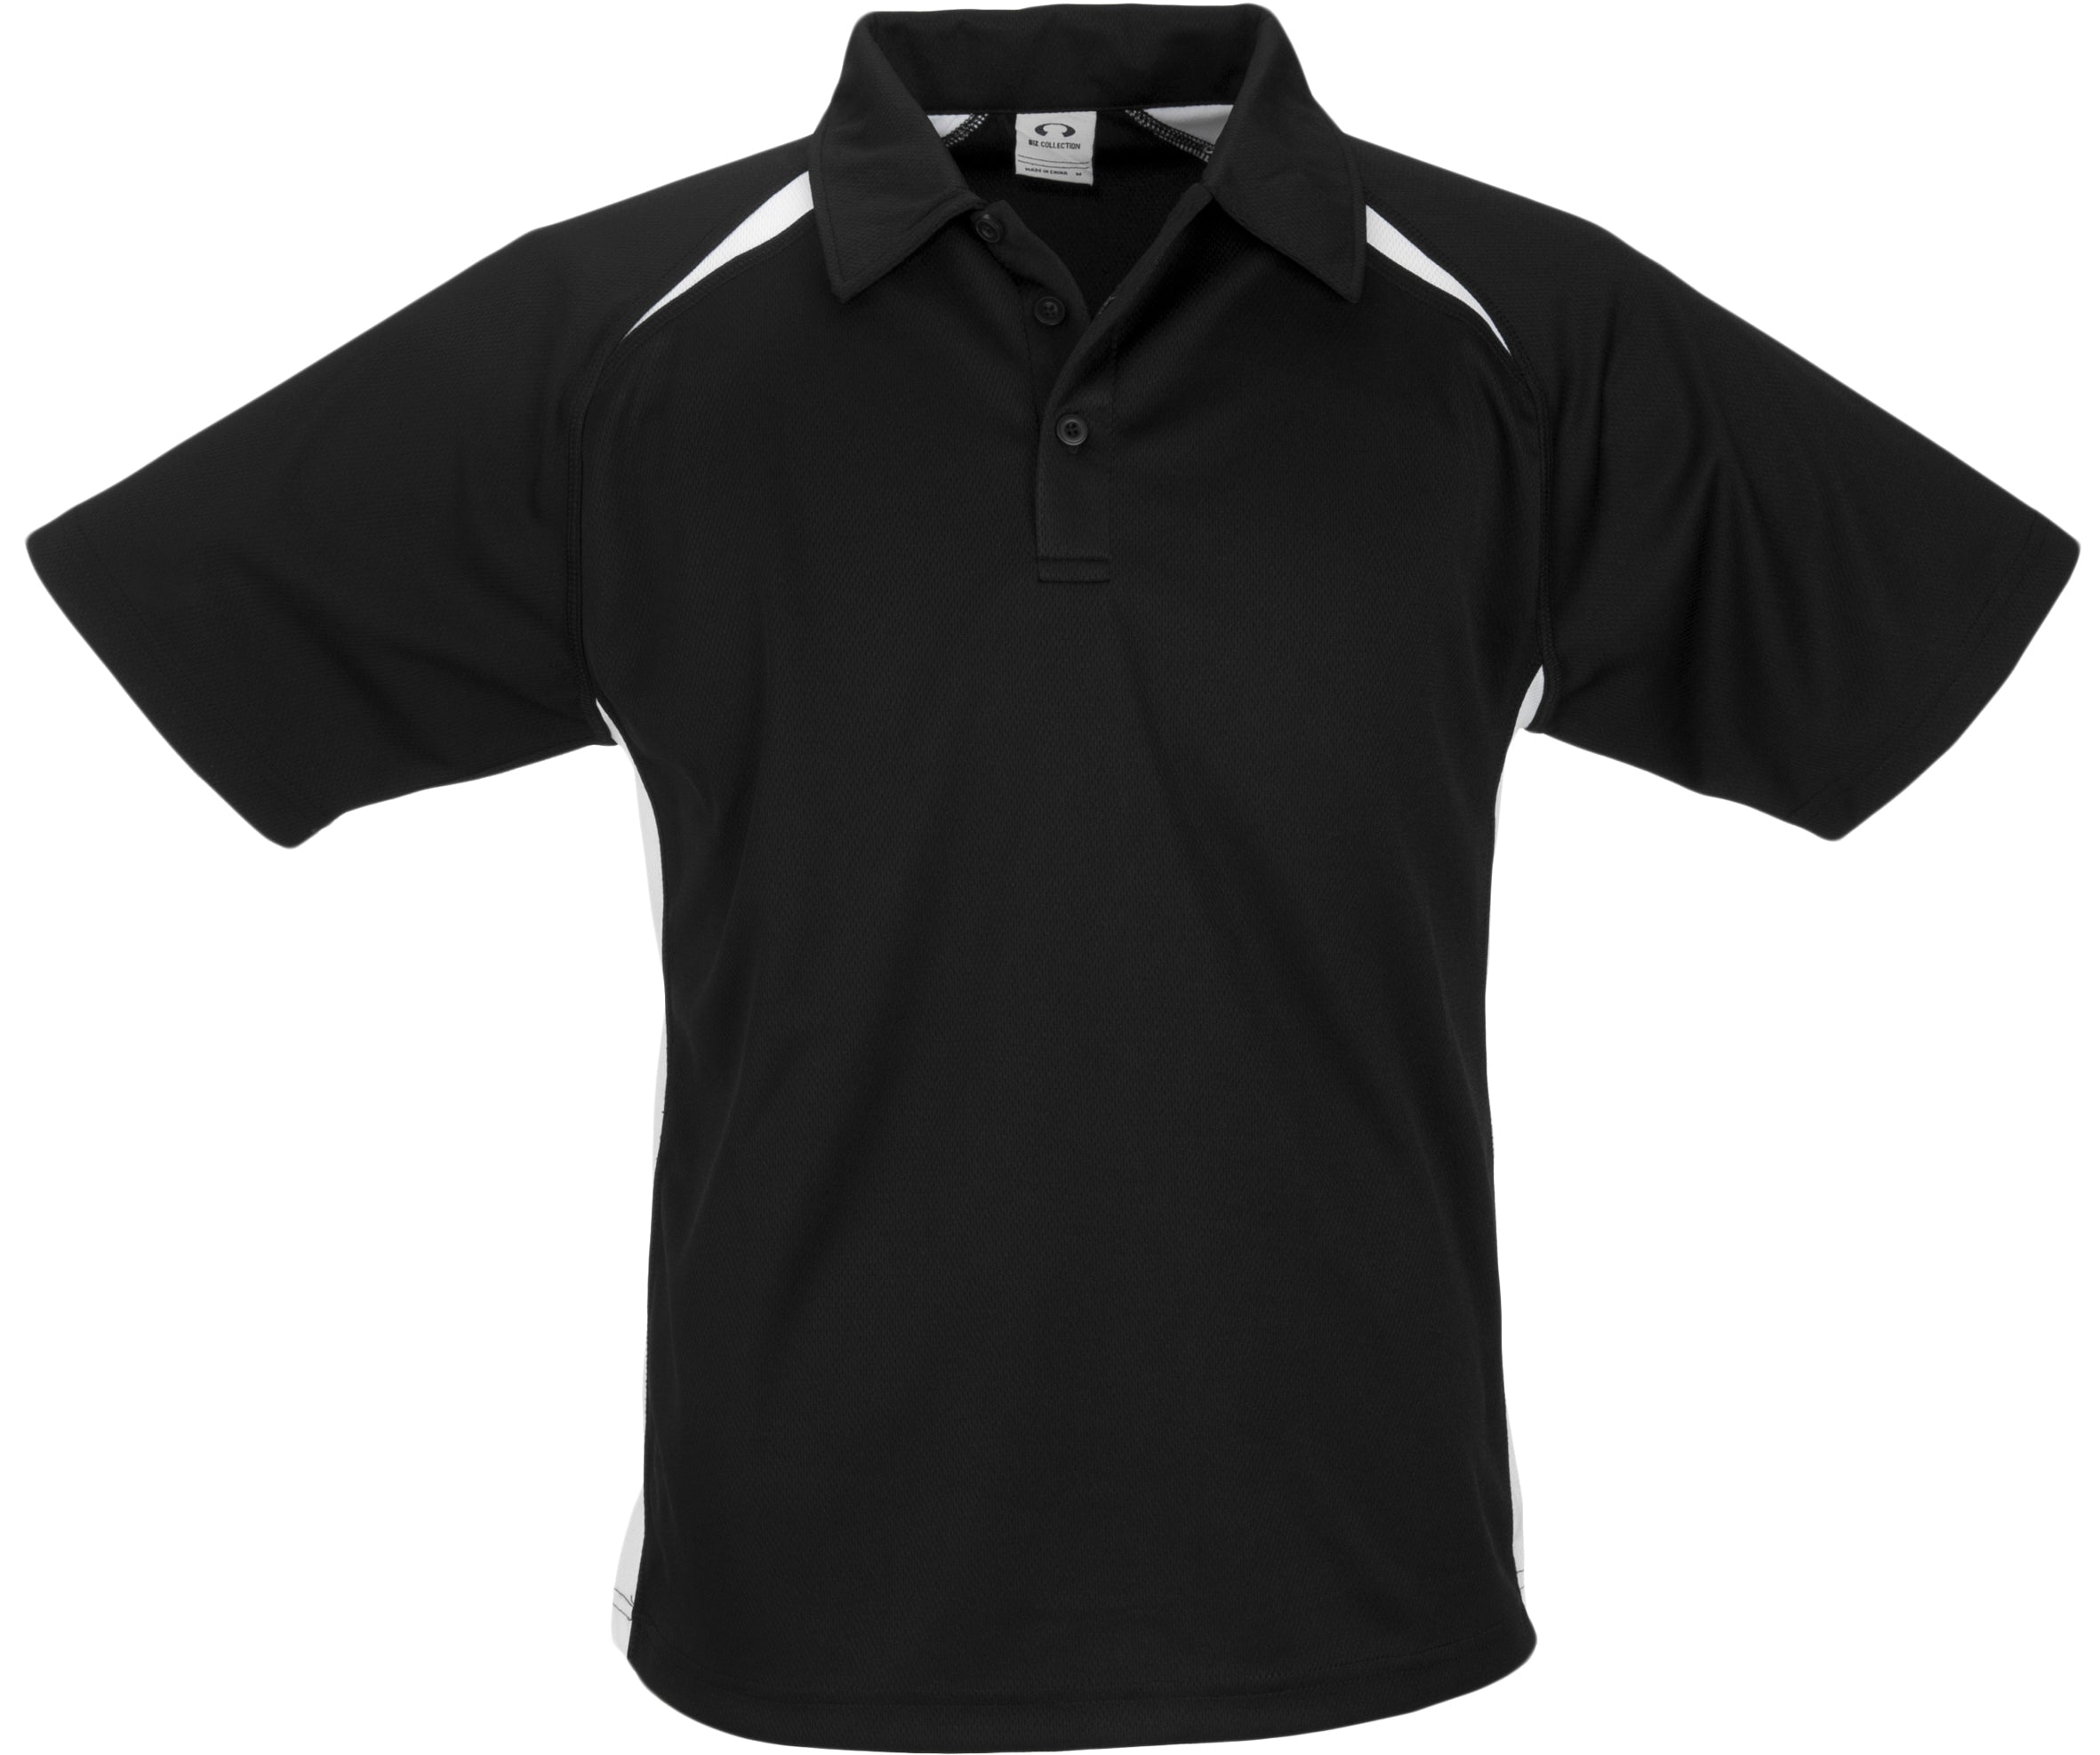 Mens Splice Golf Shirt-L-Black With White-BLW